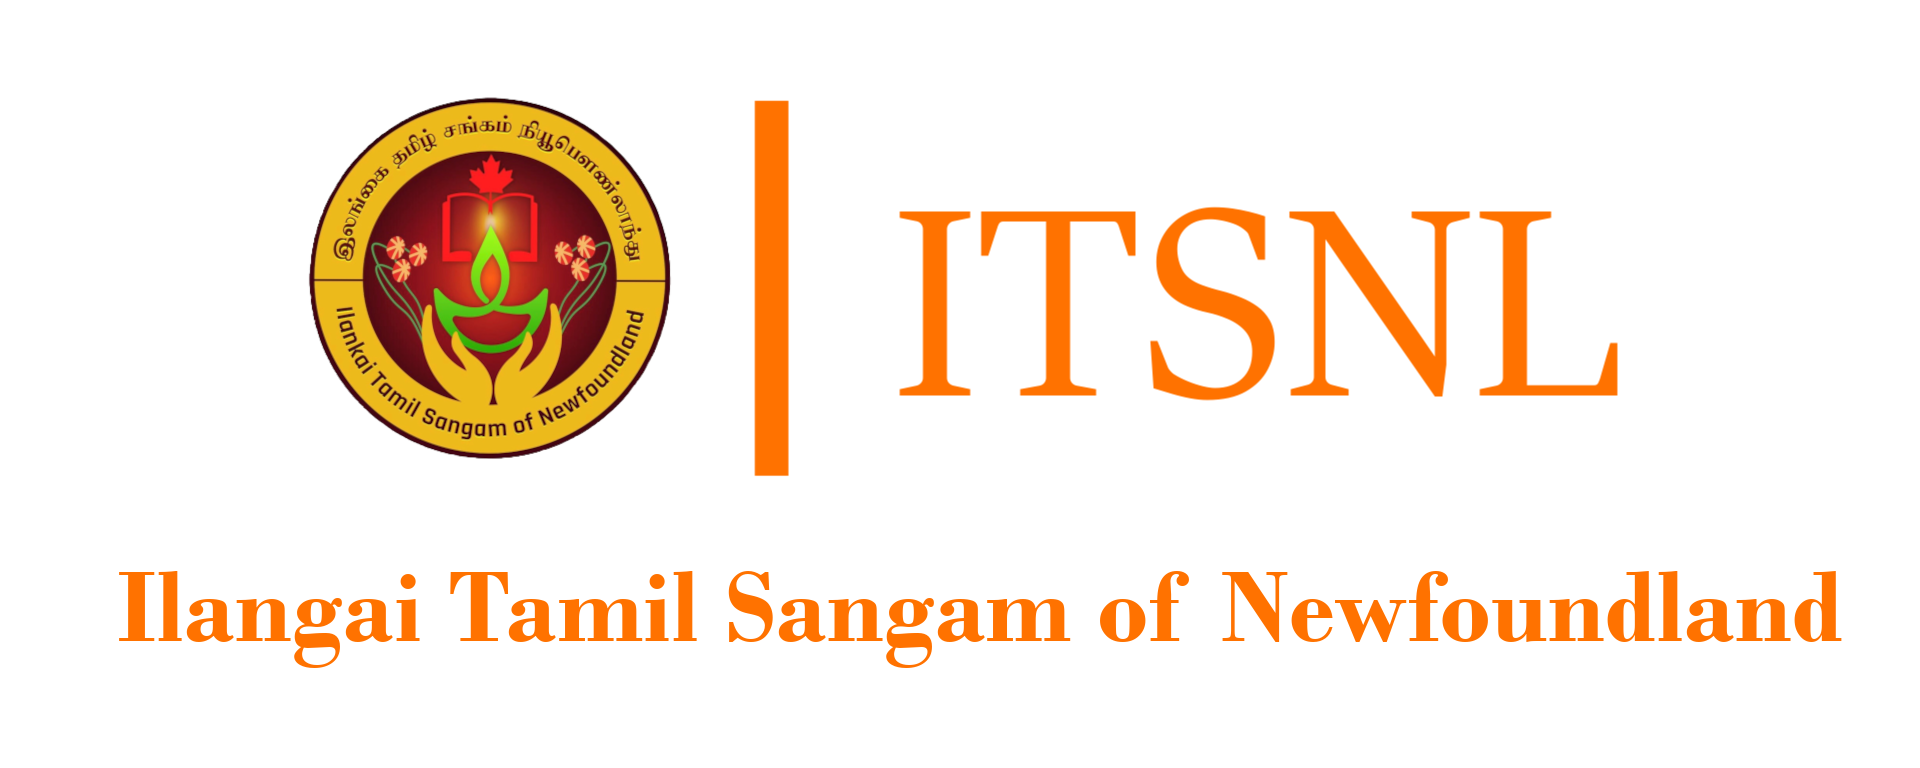 Ilangai Tamil Sangam of Newfoundland